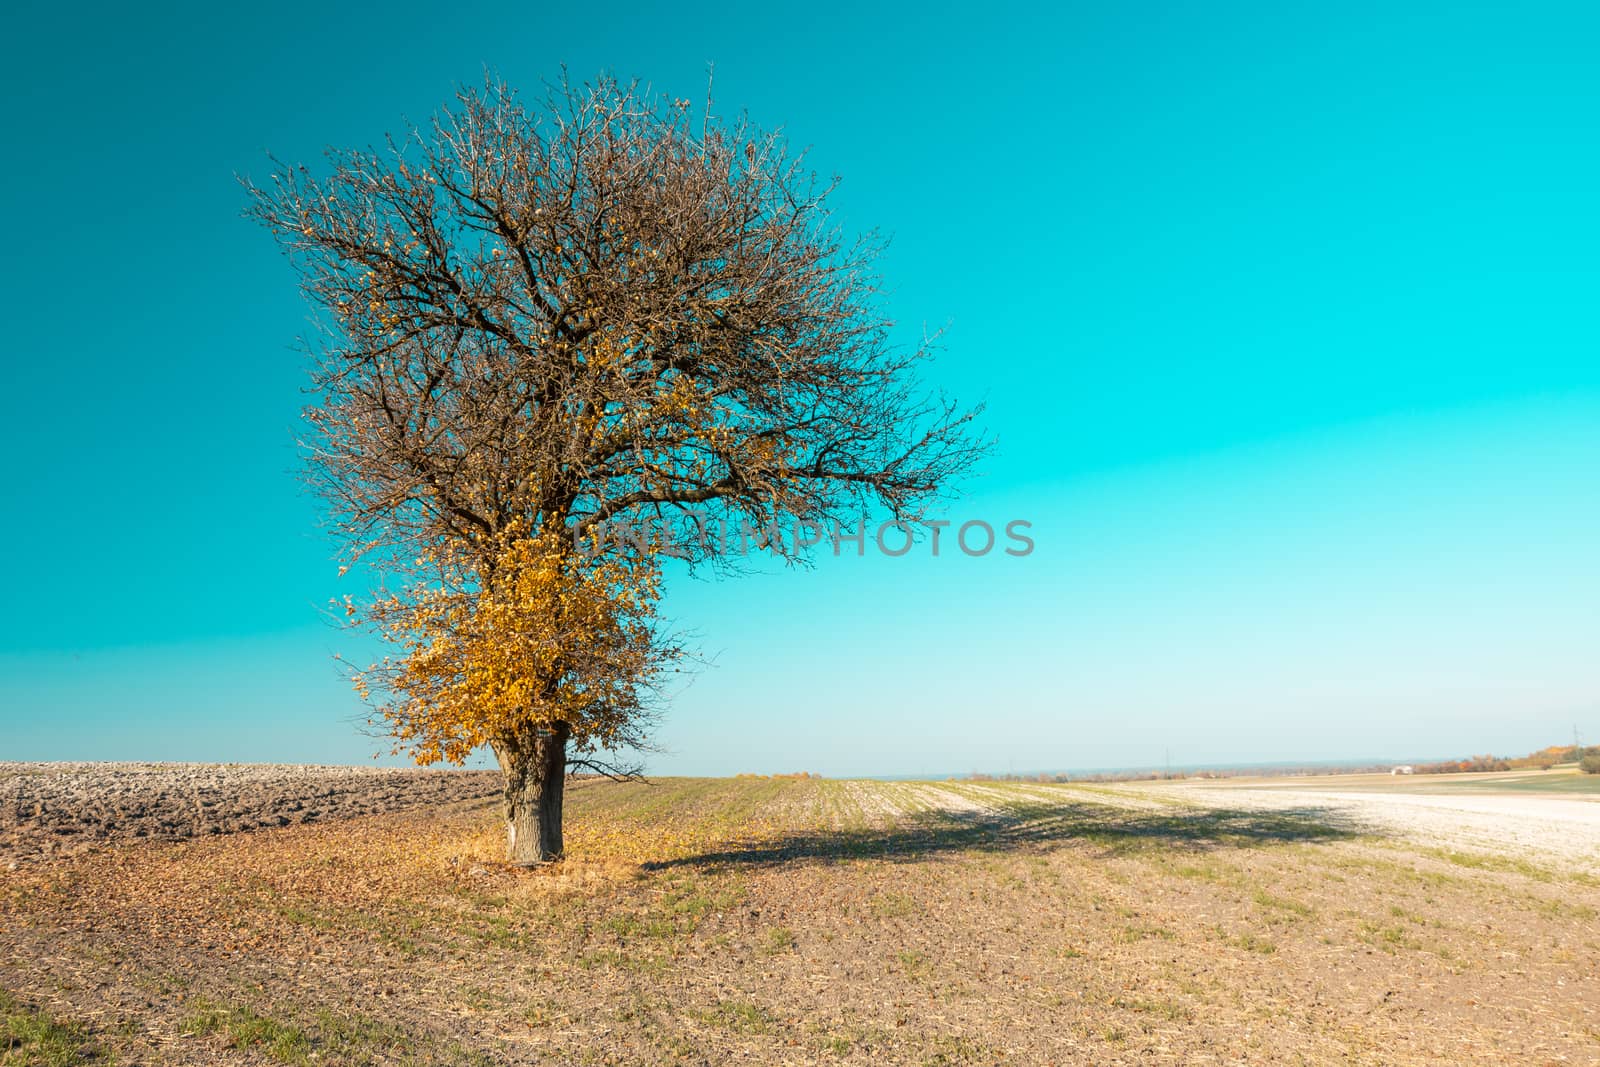 Autumn tree with fallen leaves in the field by darekb22